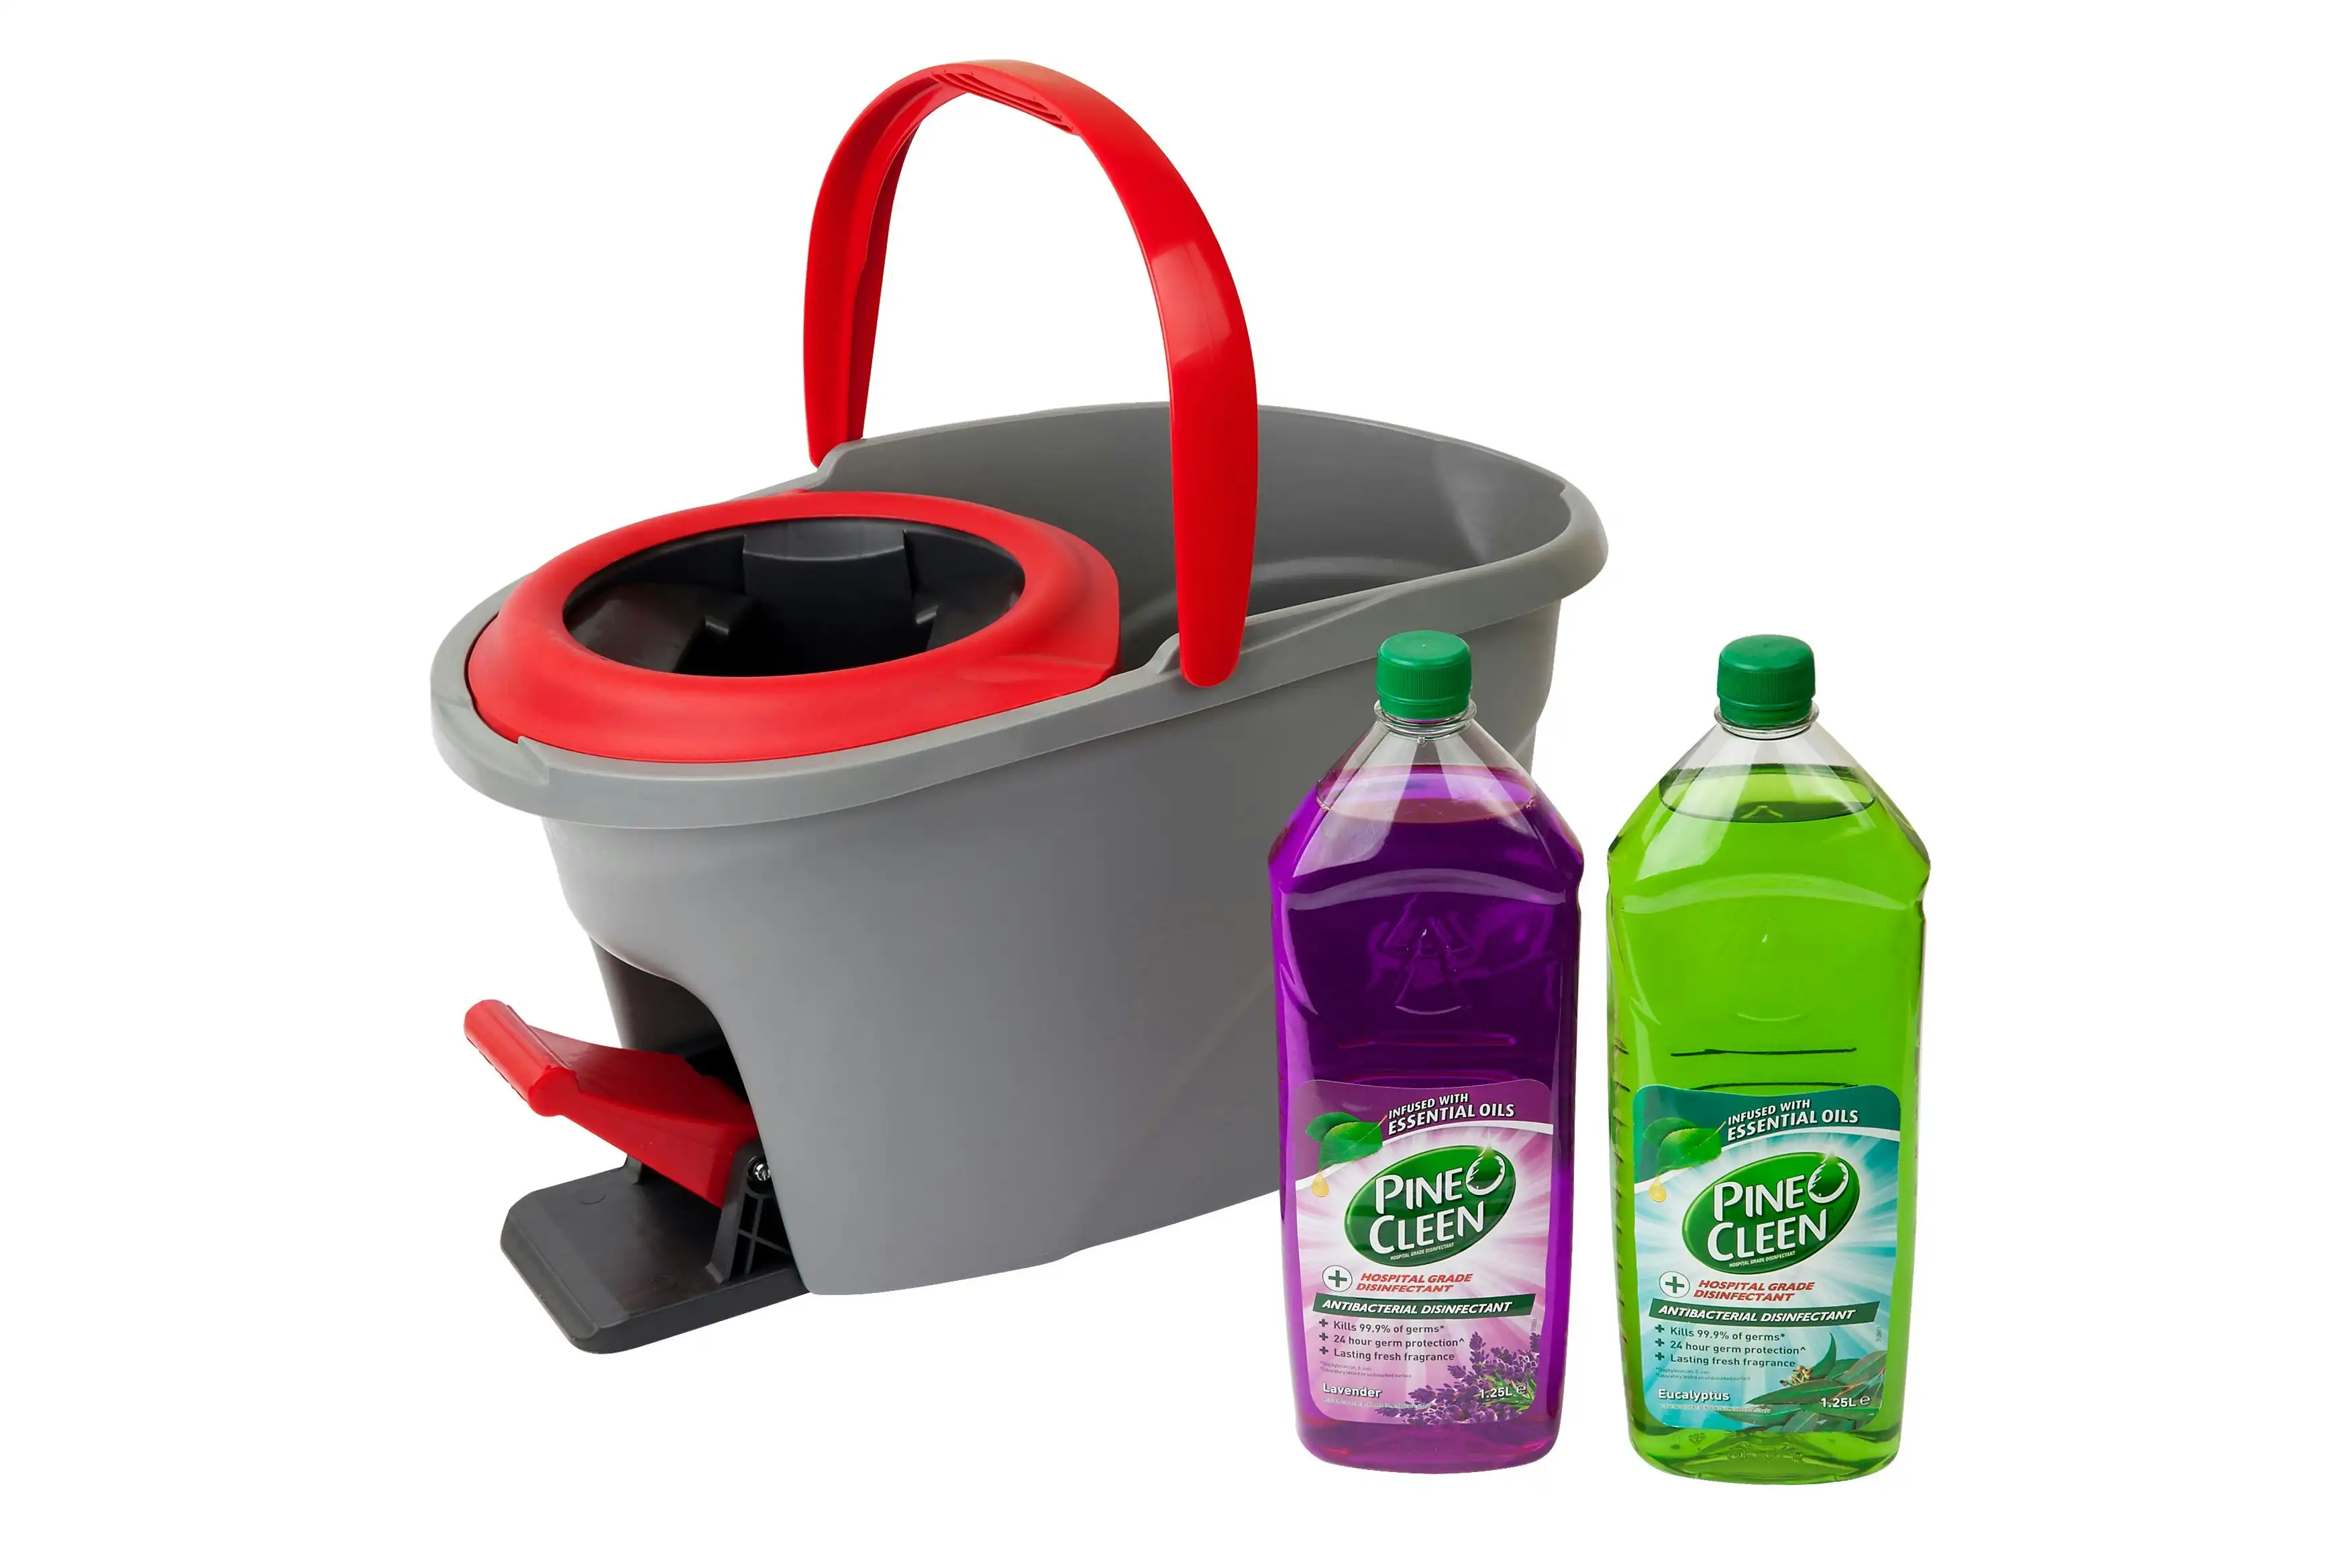 Vileda Premium 5 Spin Mop Bucket With Pine o Cleen